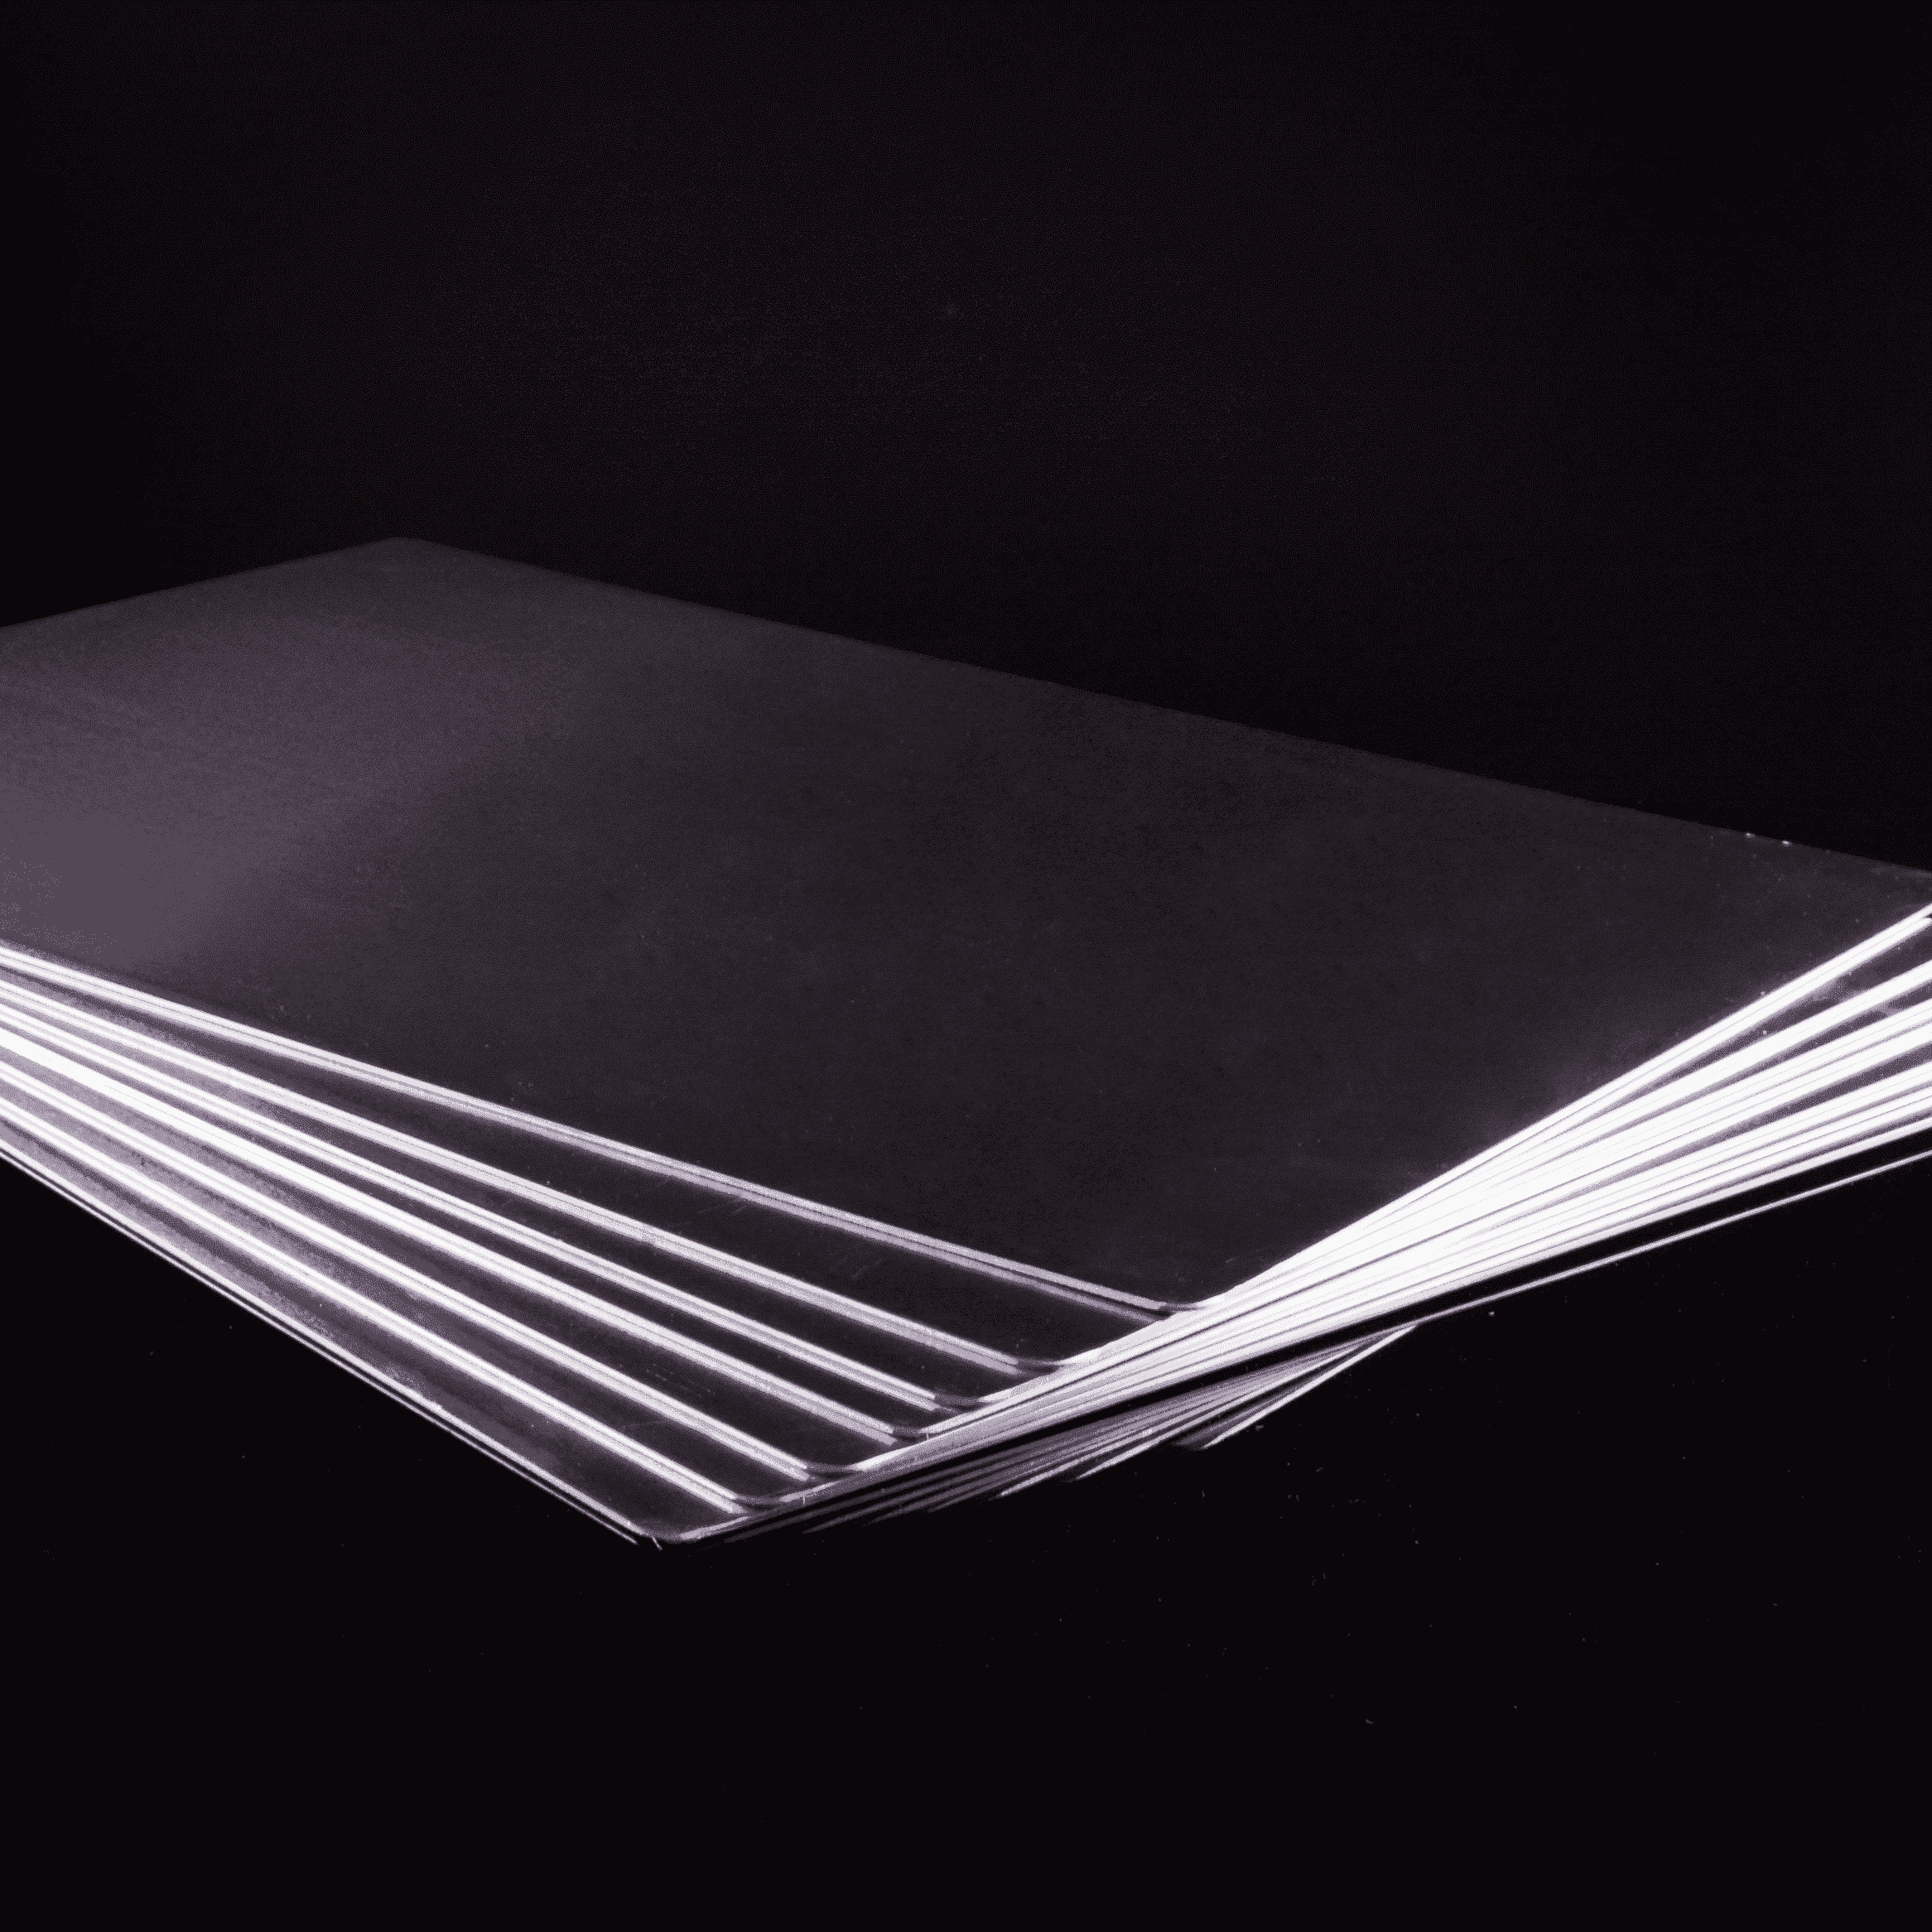 Plaque aluminium sans rebord - 60 x 40 cm x ep 2 mm - Mallard